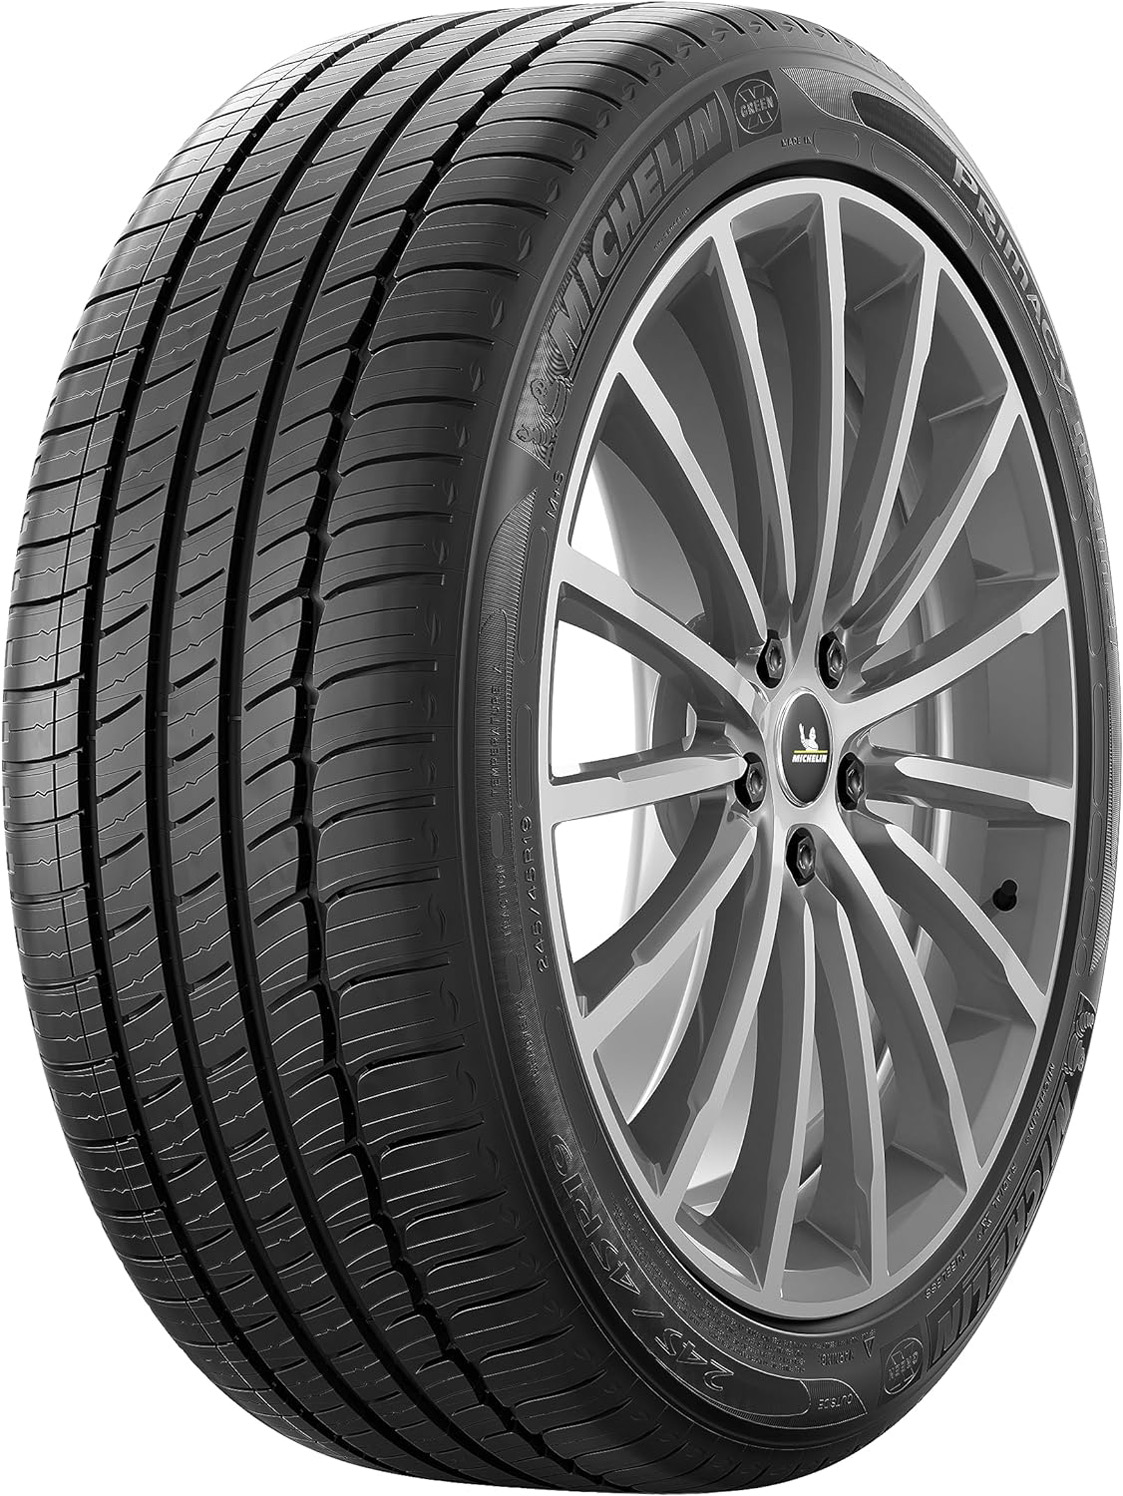 Michelin Primacy MXM4 All-Season 23540R19XL 96V Tire